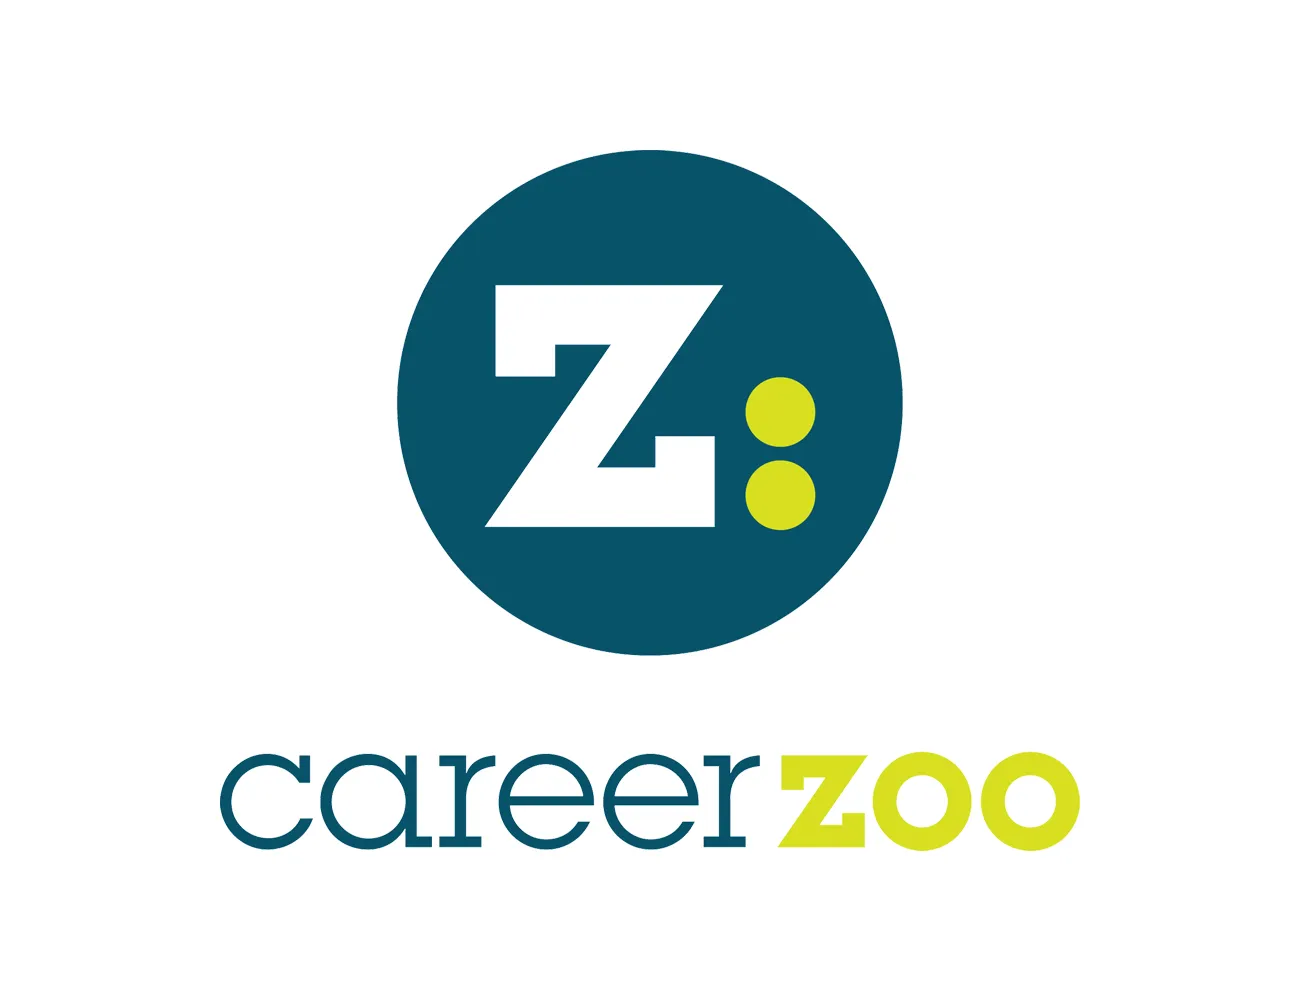 Institute Featuring at Career Zoo